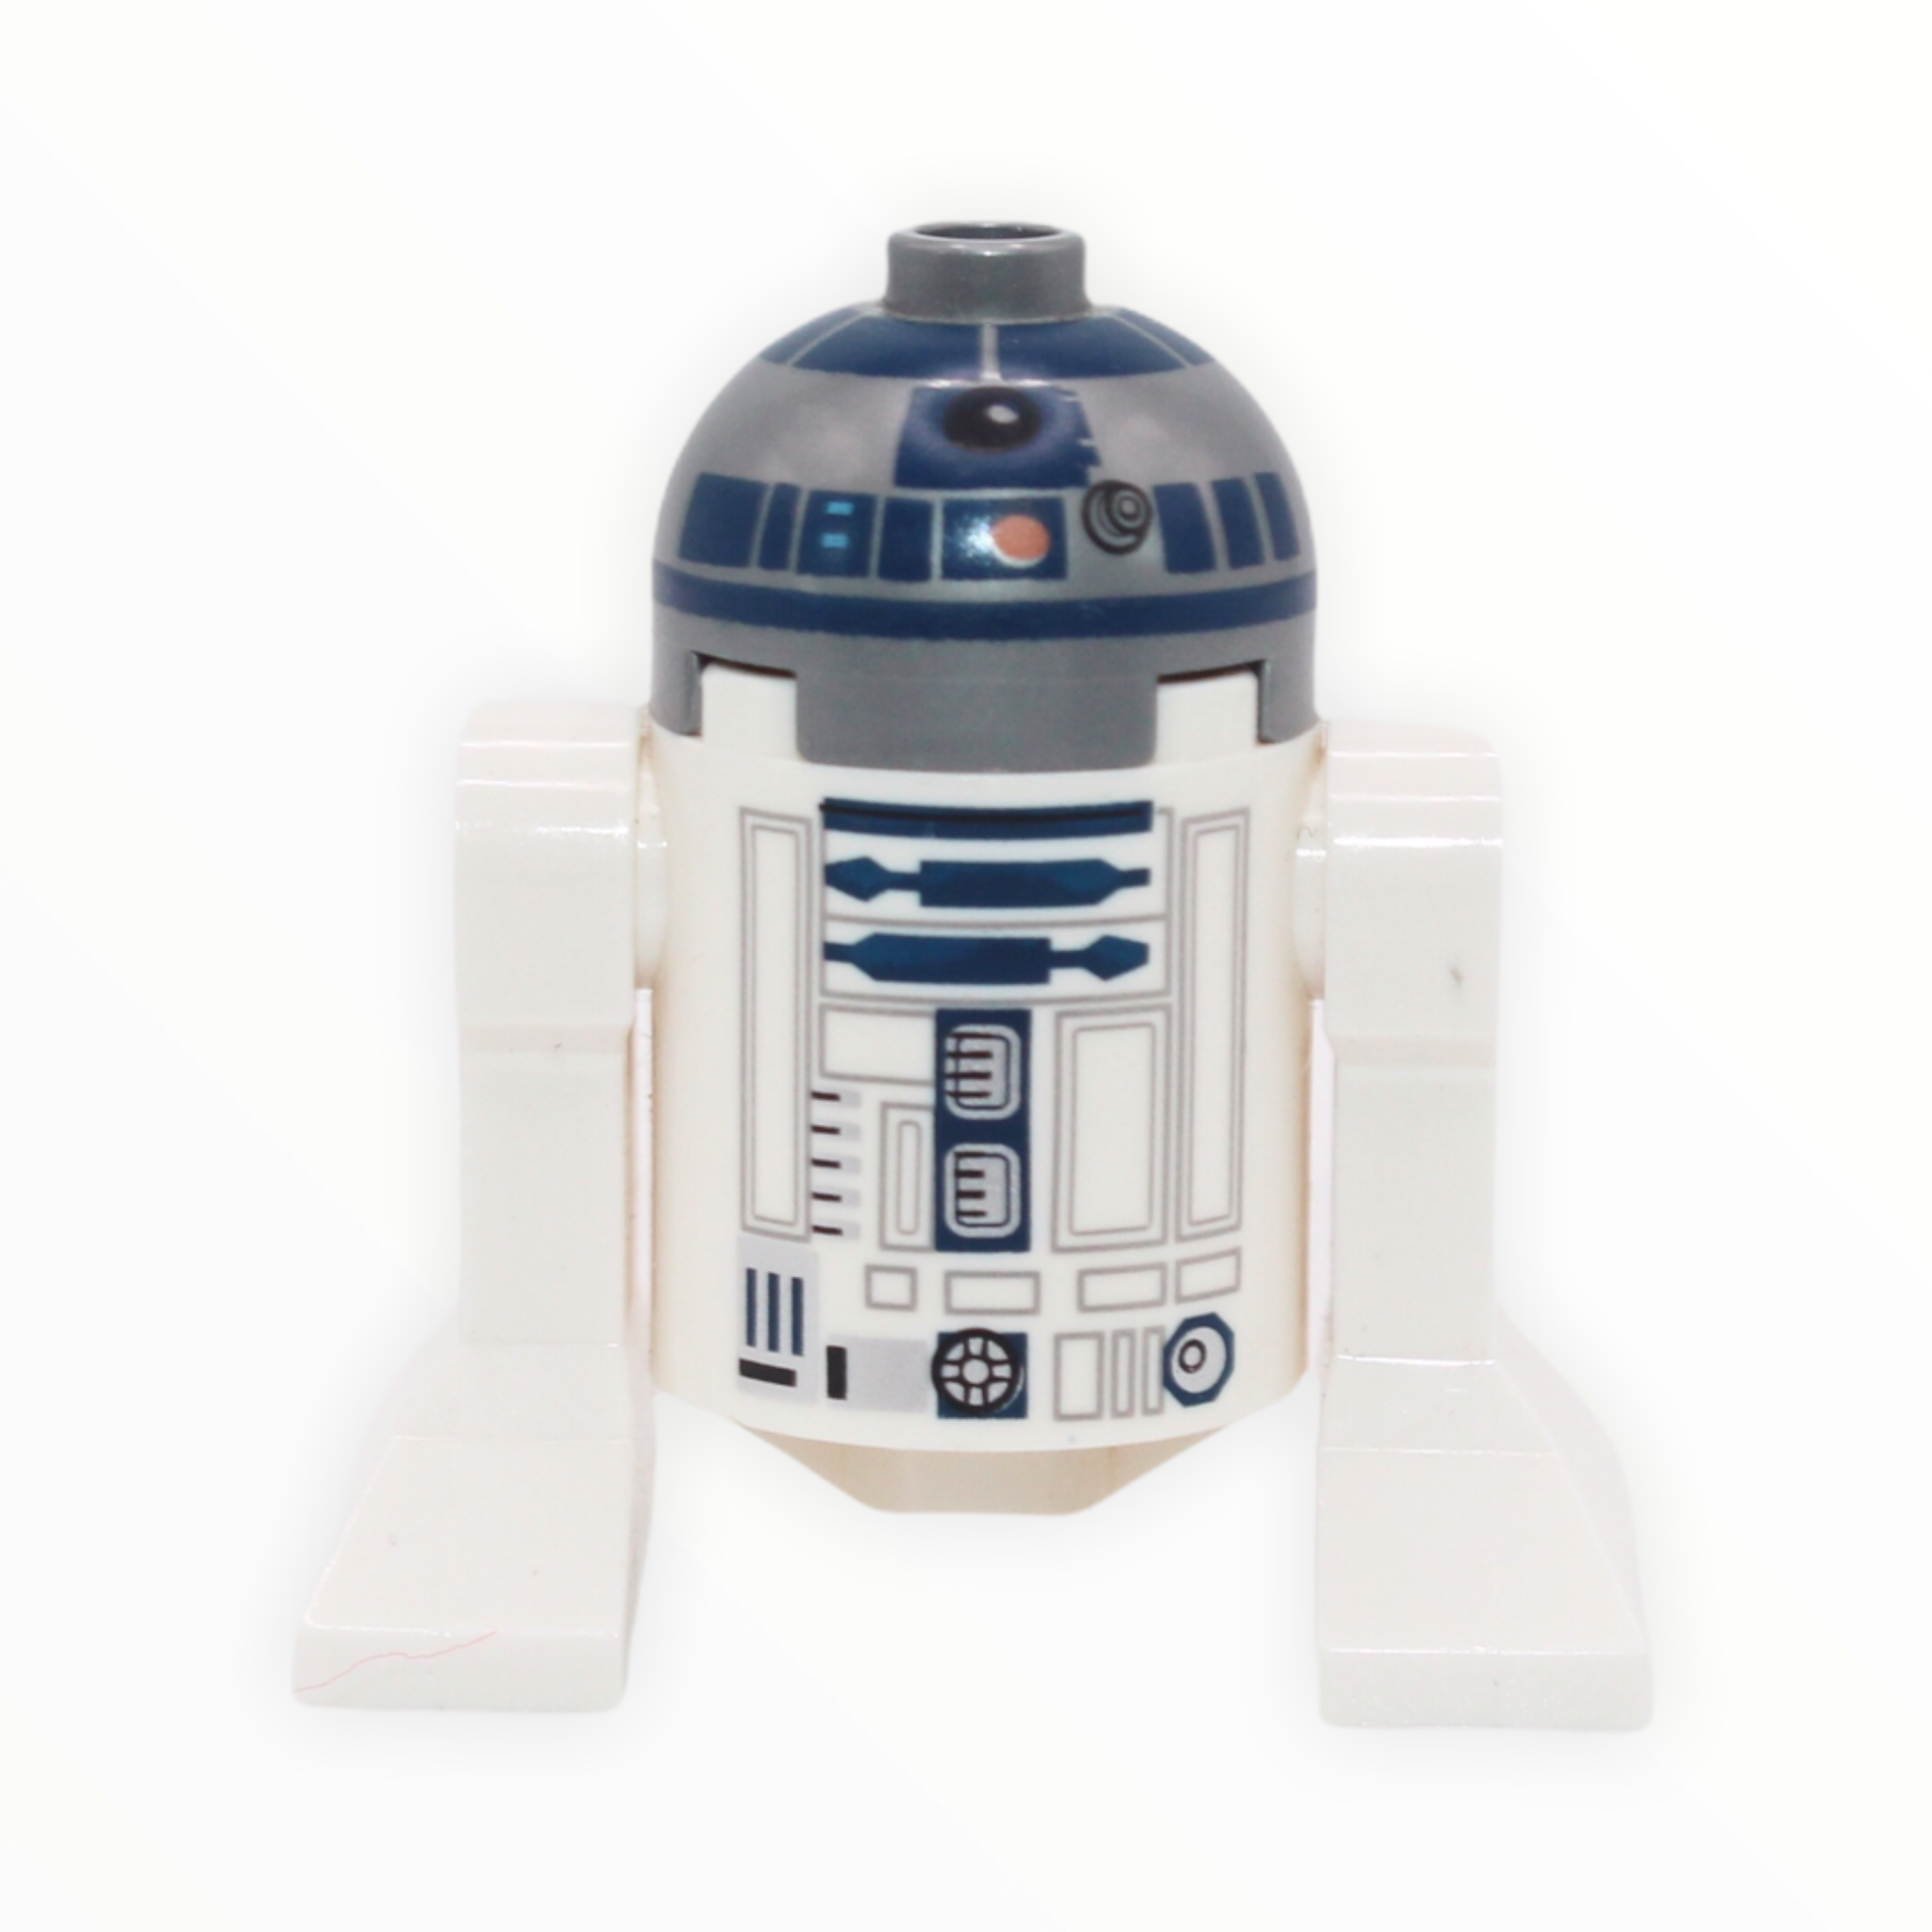 R2-D2 (flat silver, red dot)